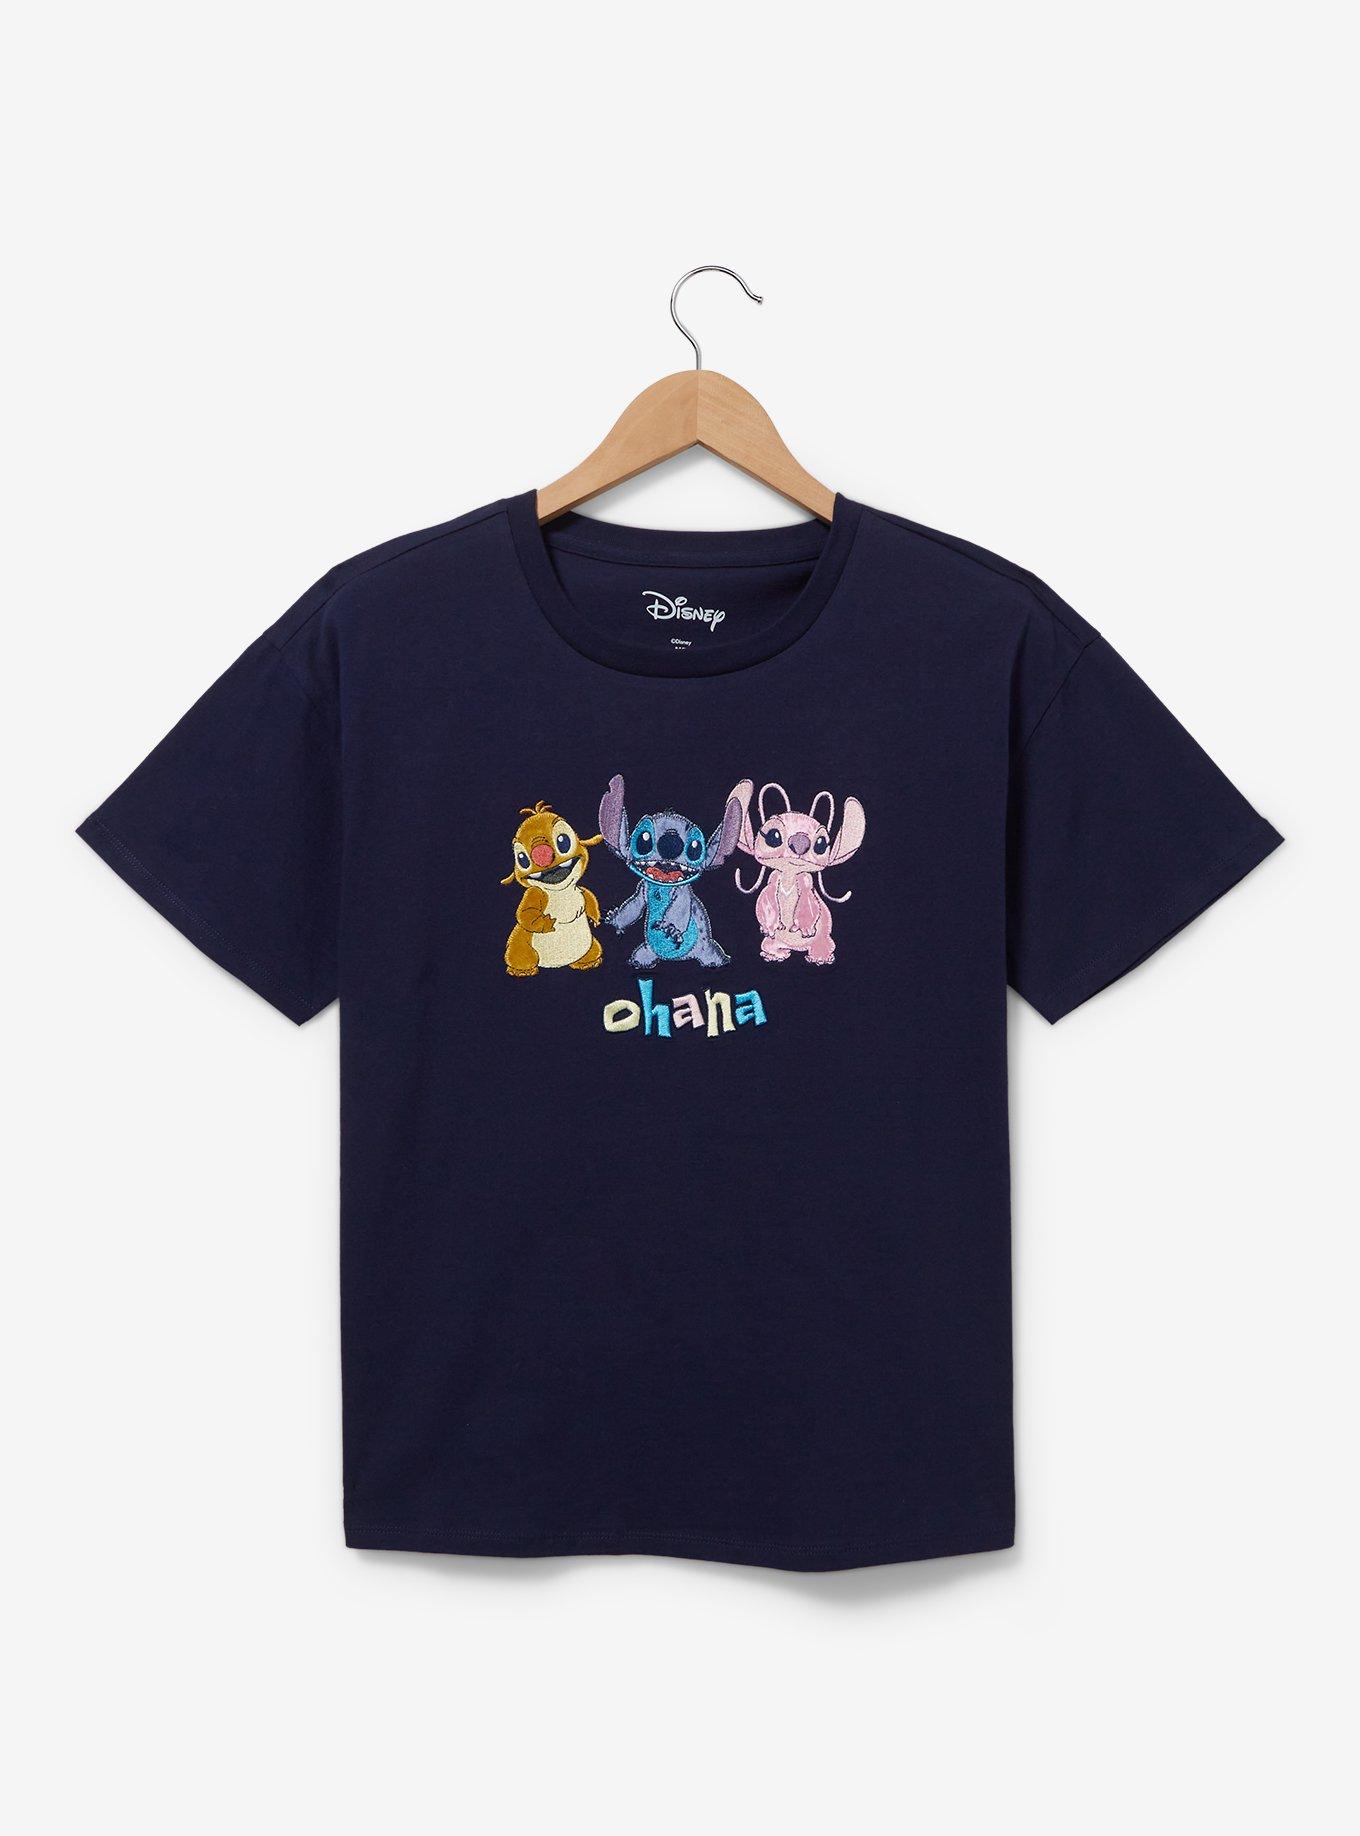 Disney Lilo & Stitch Reuben, Angel, and Stitch Ohana Embroidered T-Shirt, , hi-res